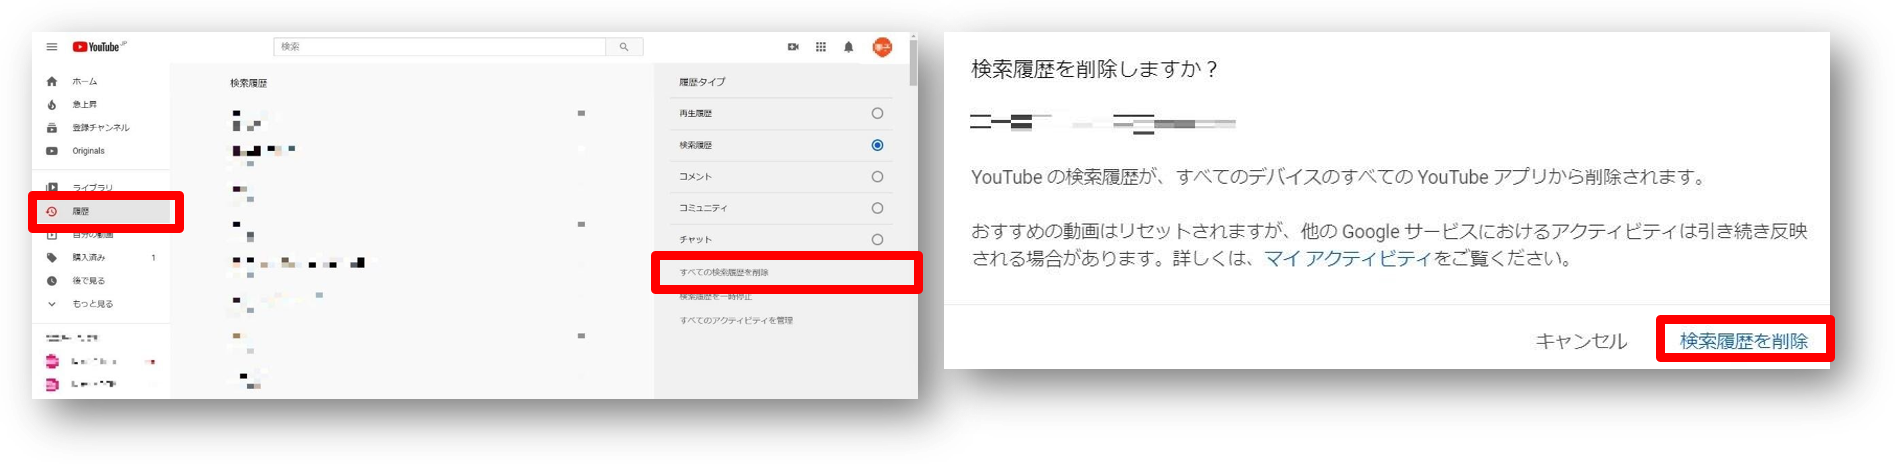 Youtube検索履歴 再生履歴の削除は簡単 Iphone Pc Ipadデバイスごとに手順を紹介 Iphone格安sim通信